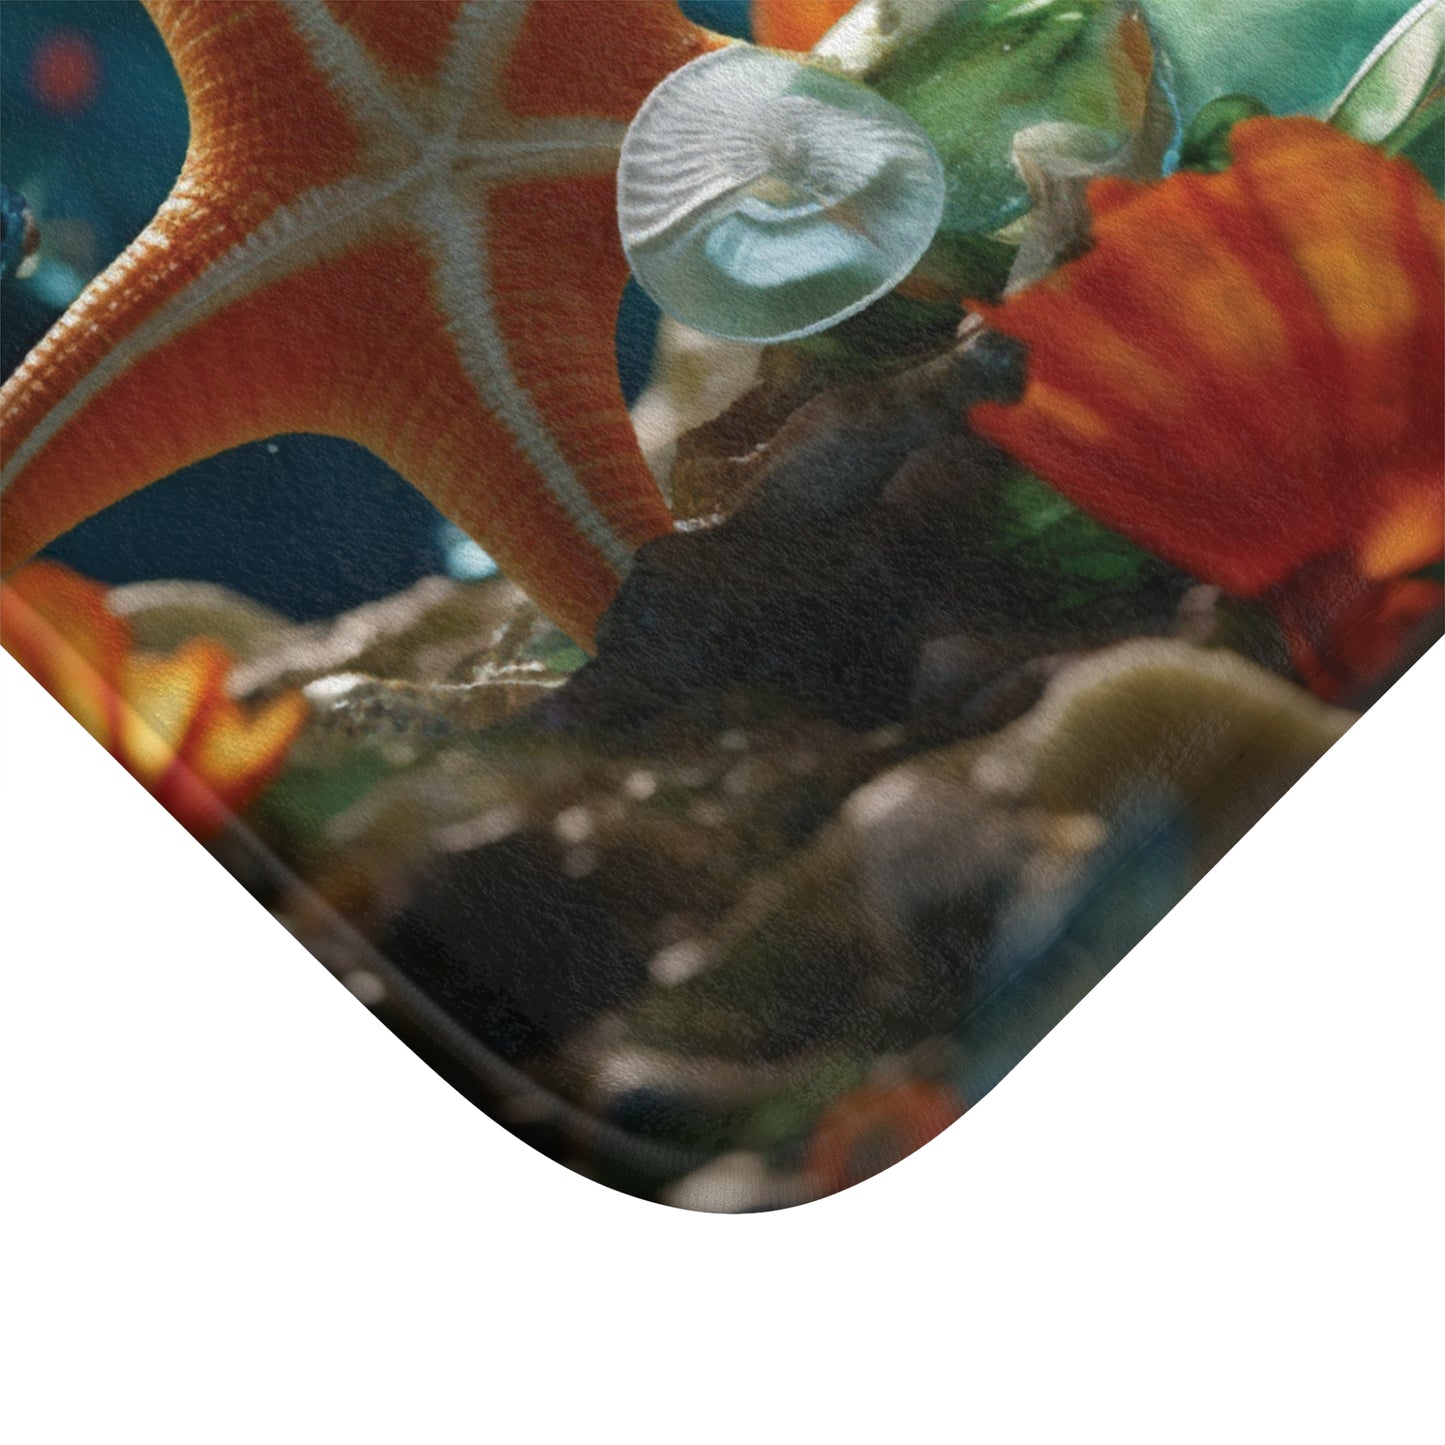 Seaside Serenity - Sea Glass and Starfish Bath Mat with Memory Foam - Fast Drying - Beach House Decor